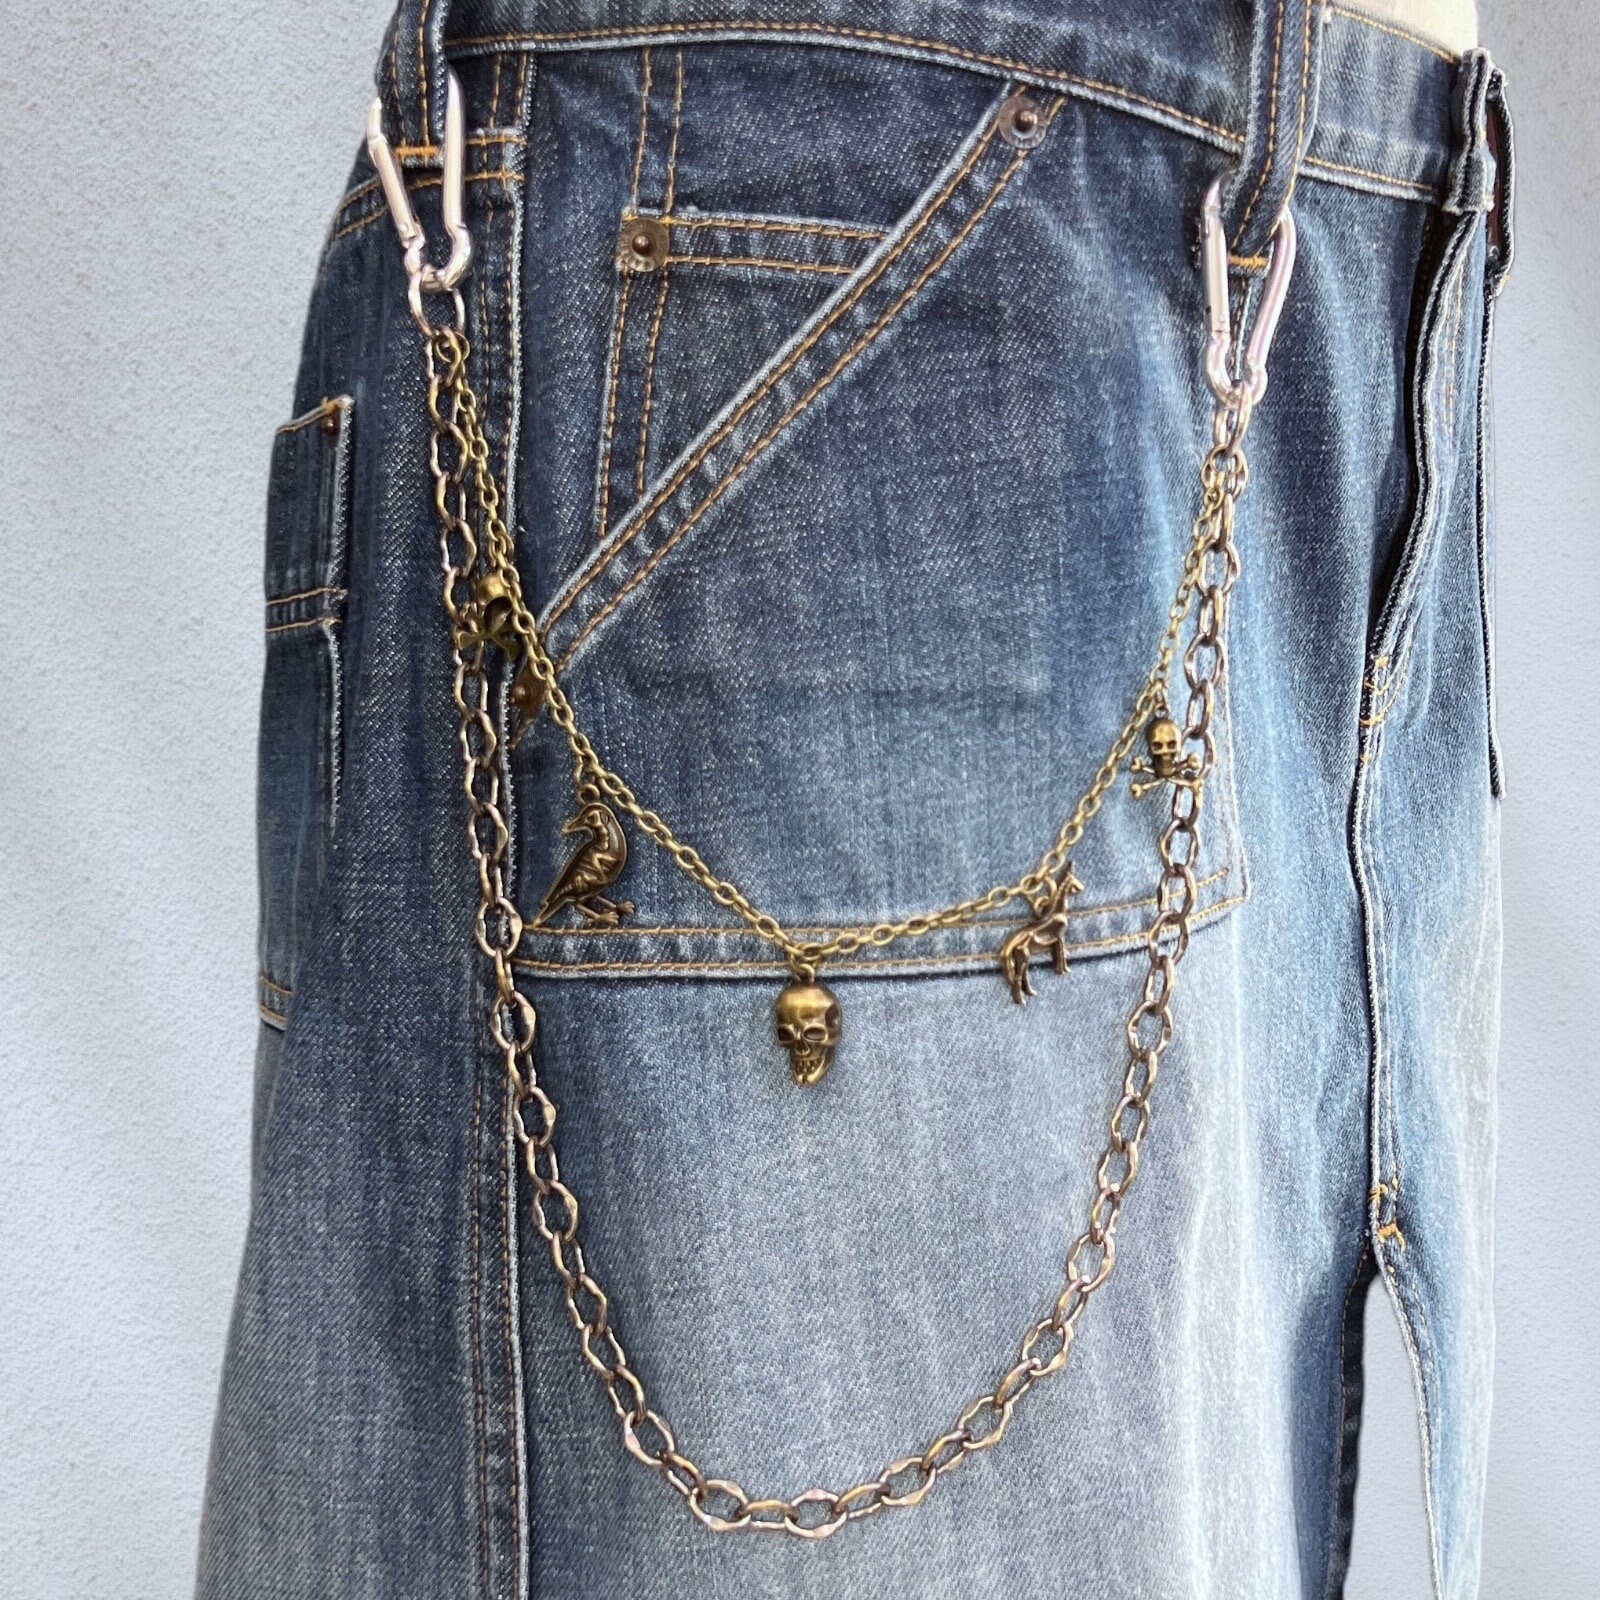 Jean Chain With Venus Symbol Charms Chain Belt, Pants Chain, Wallet Chain  With 4 Female Symbol Charms. Lesbian Sapphic Pride Accessories 